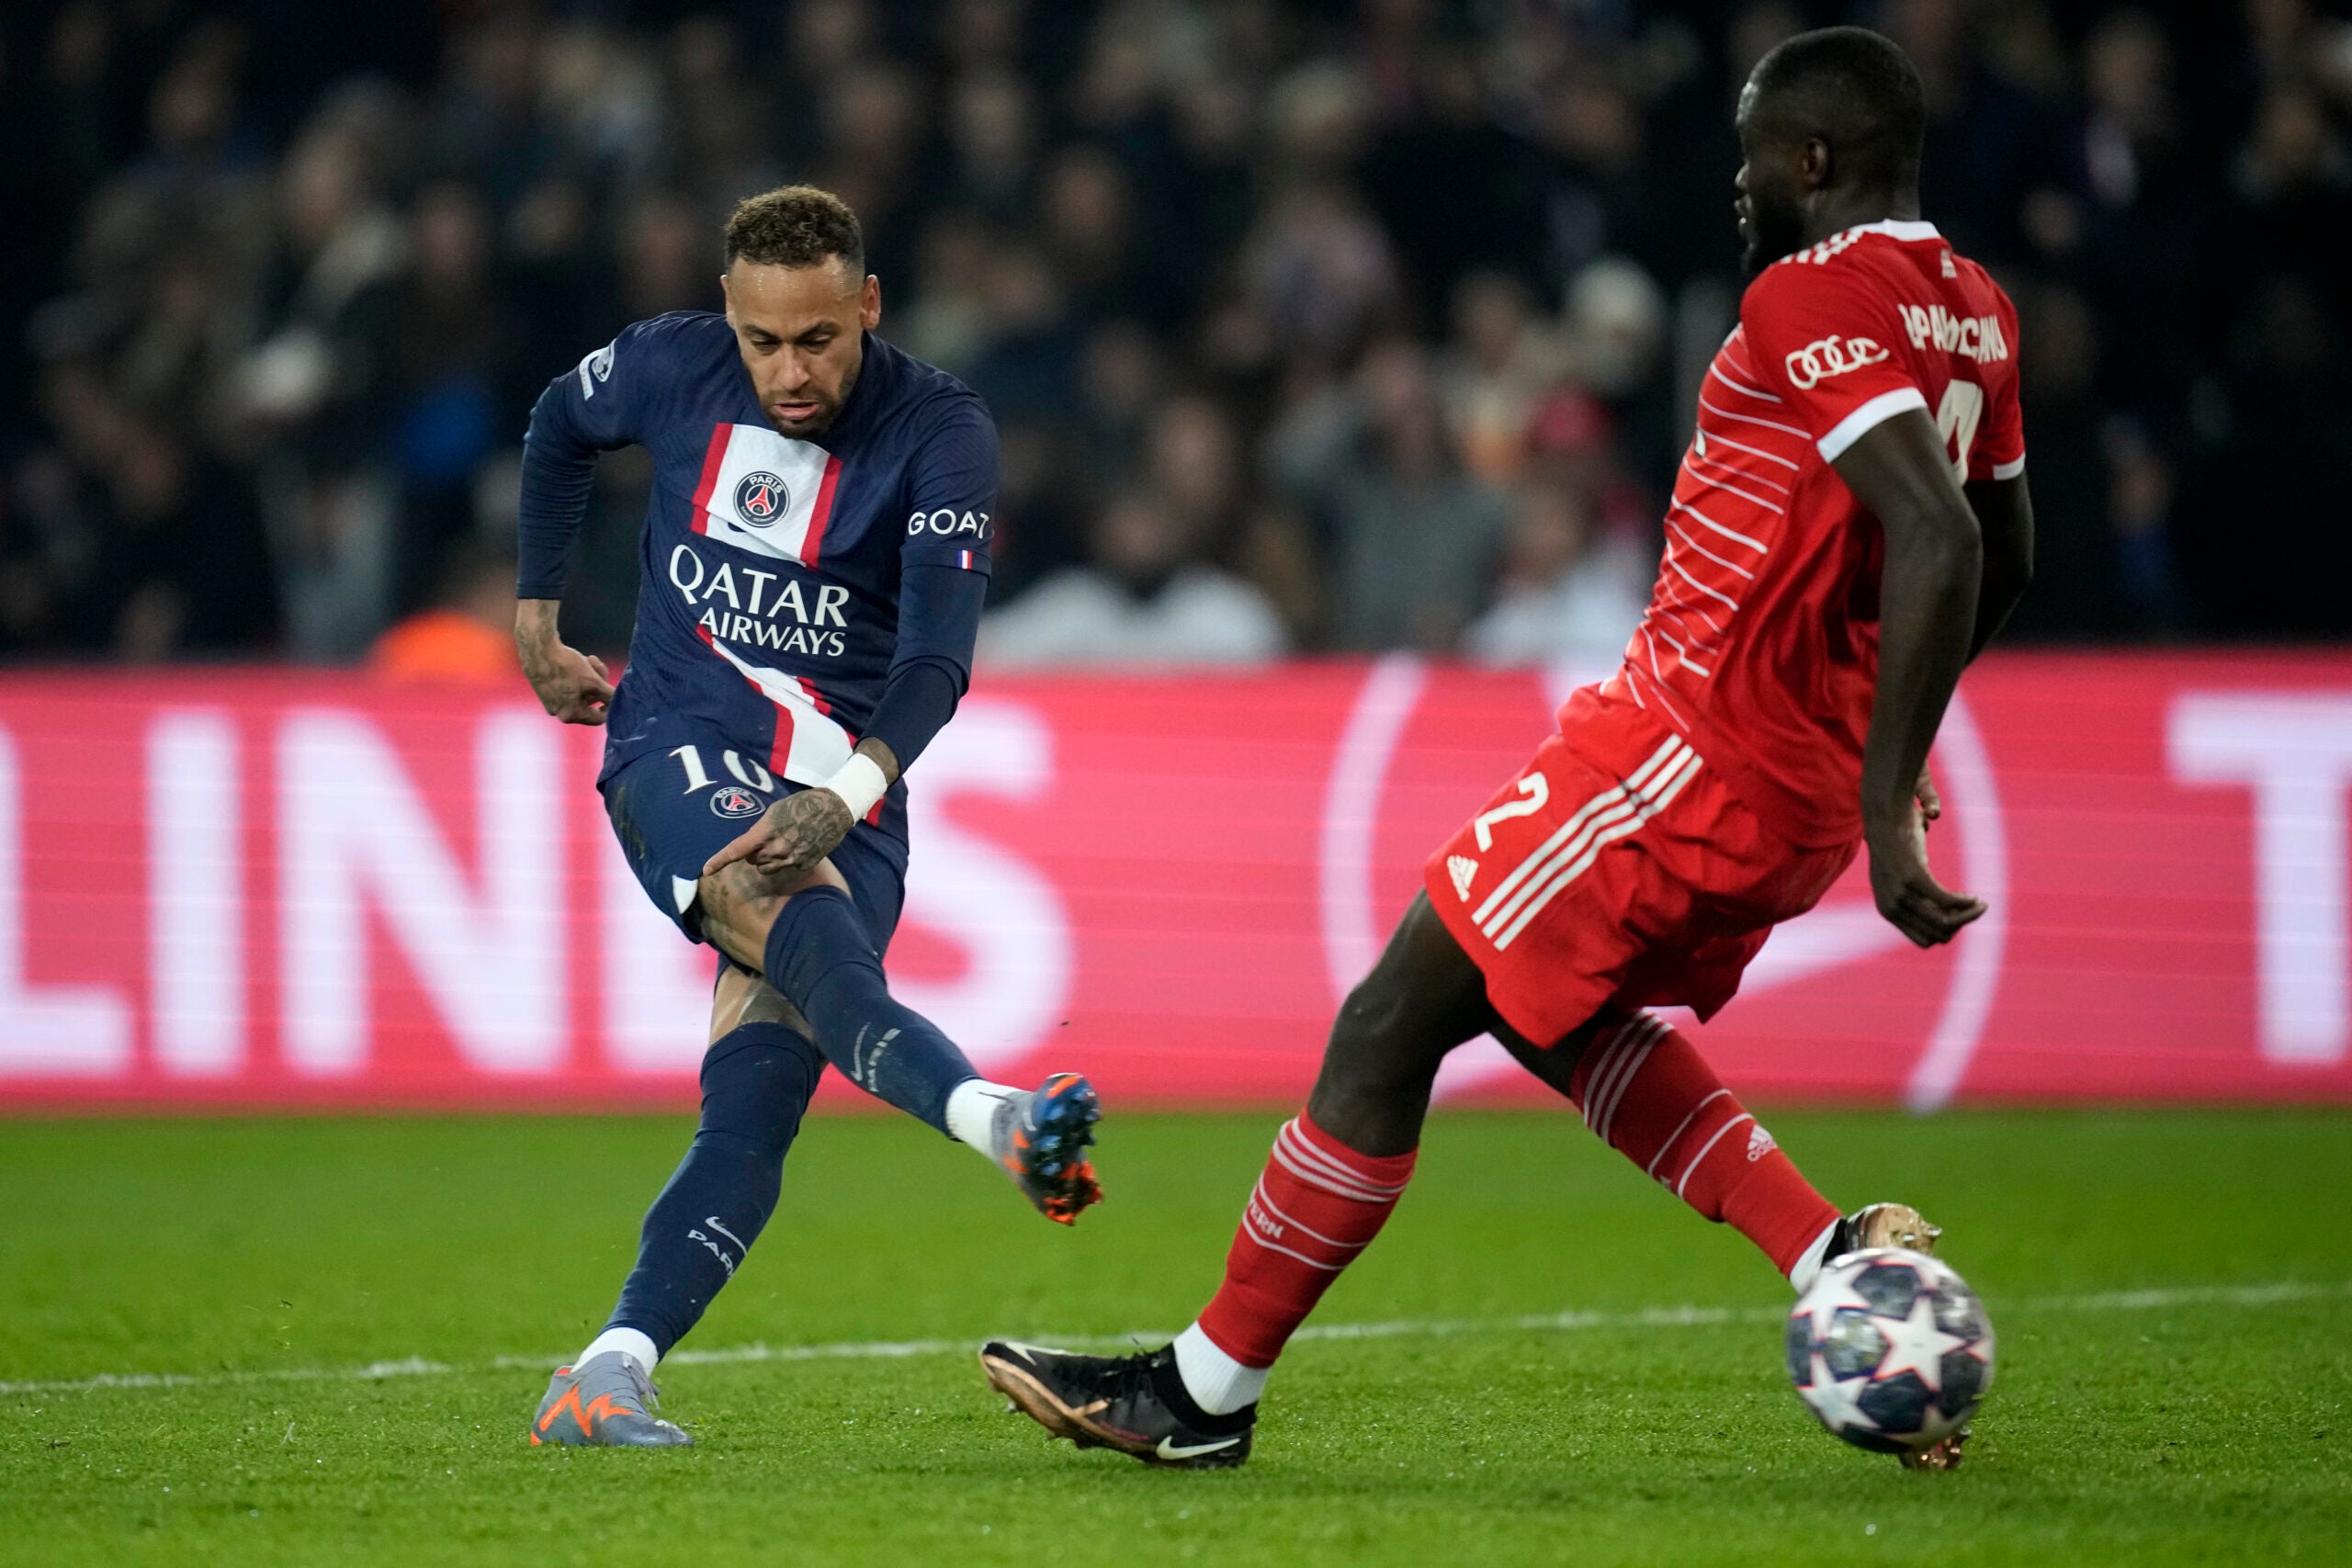 Neymar heading toward exit from Paris Saint-Germain, AP source says